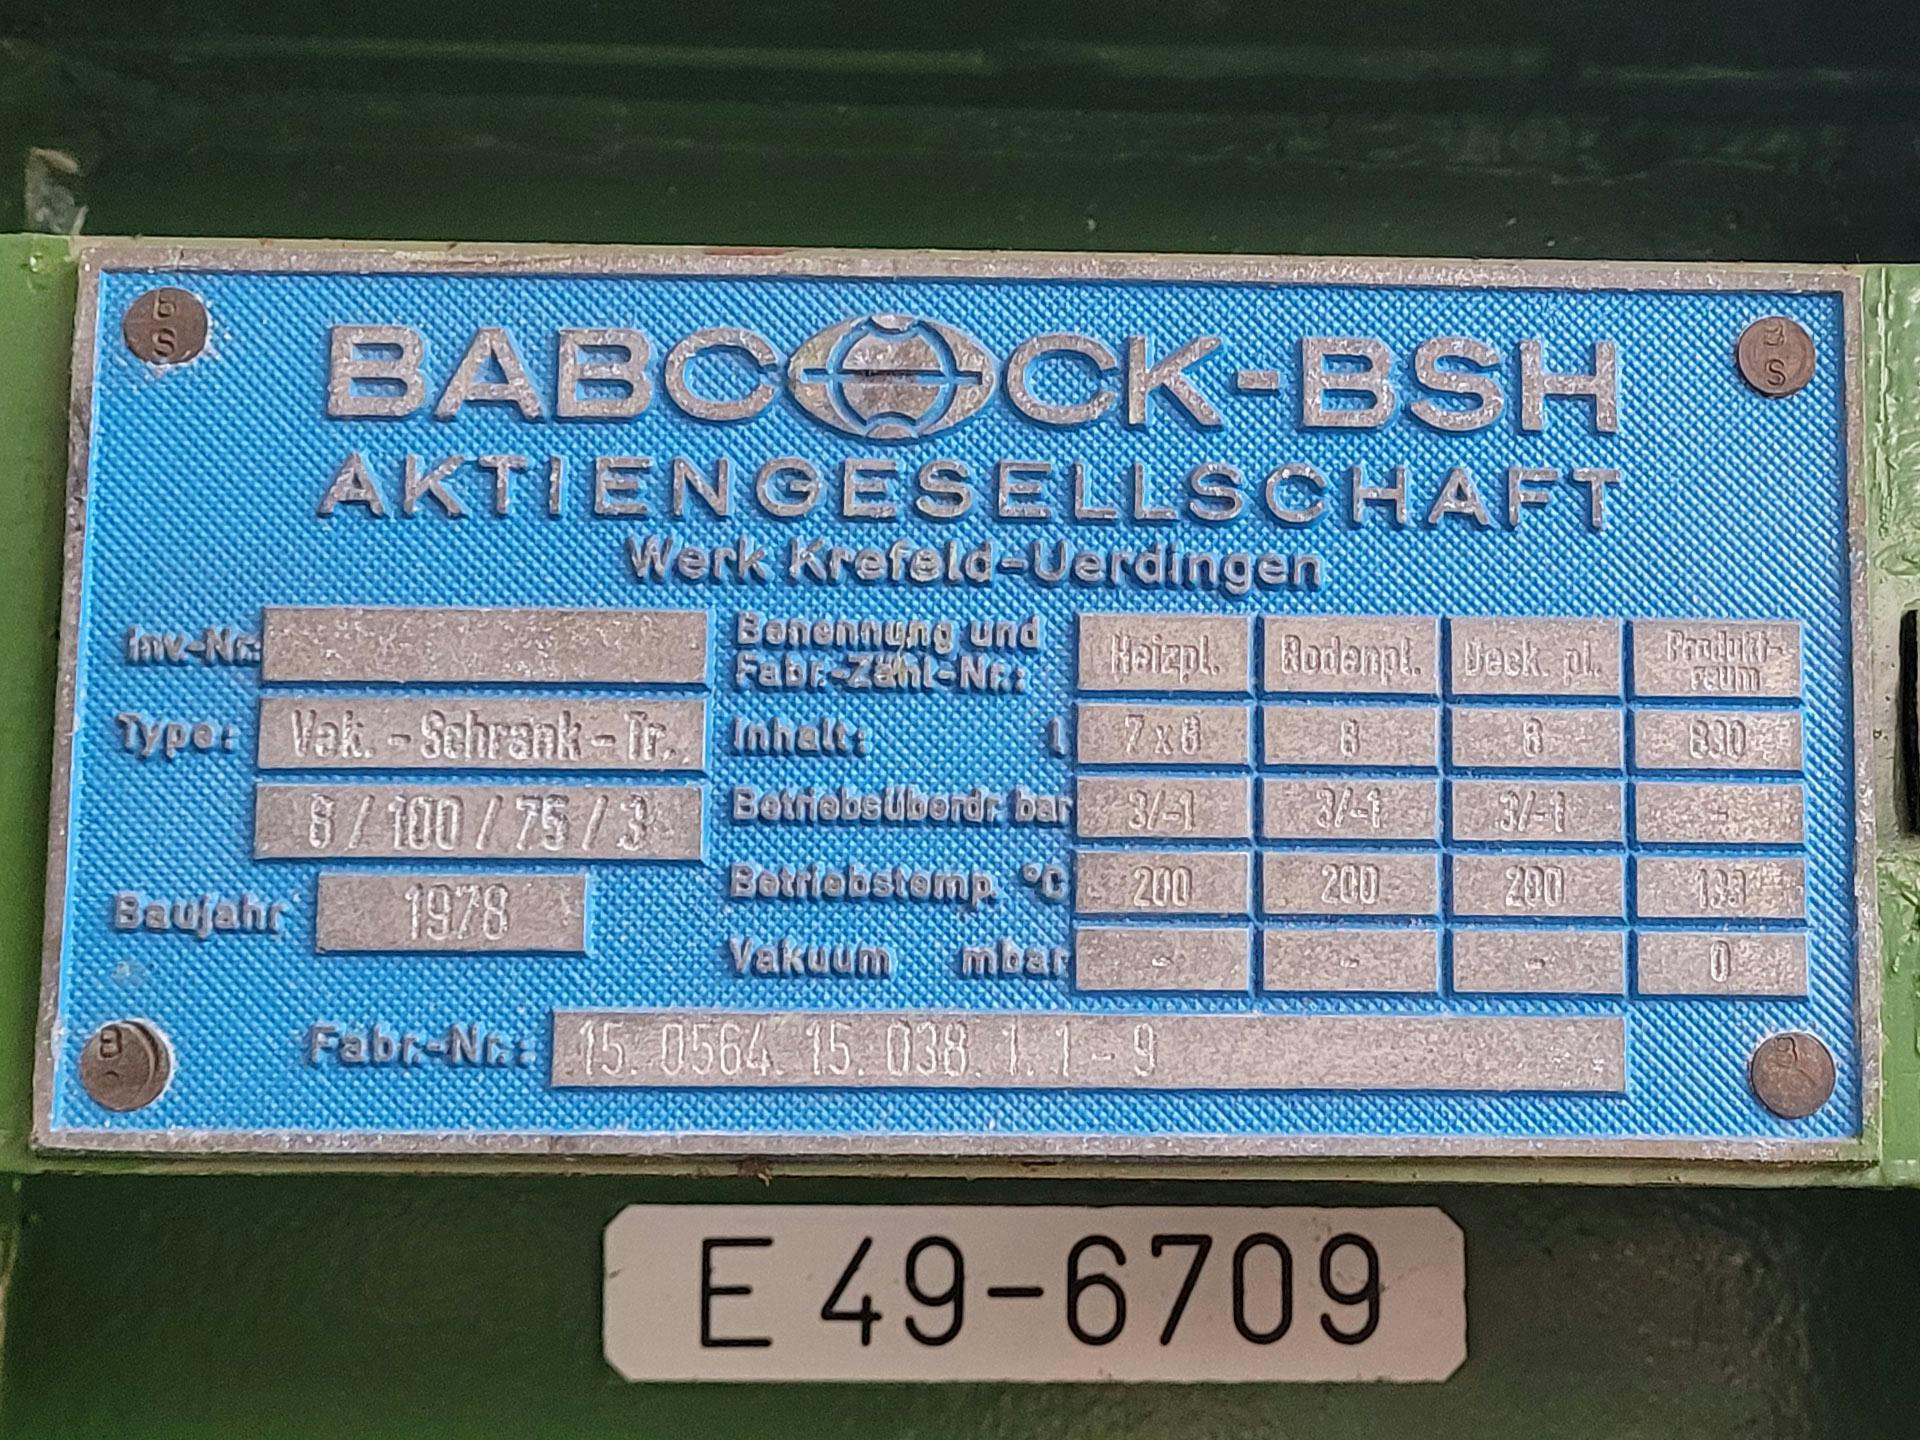 Babcock-BSH 8/100/75-3 - Suszarka półkowa - image 4